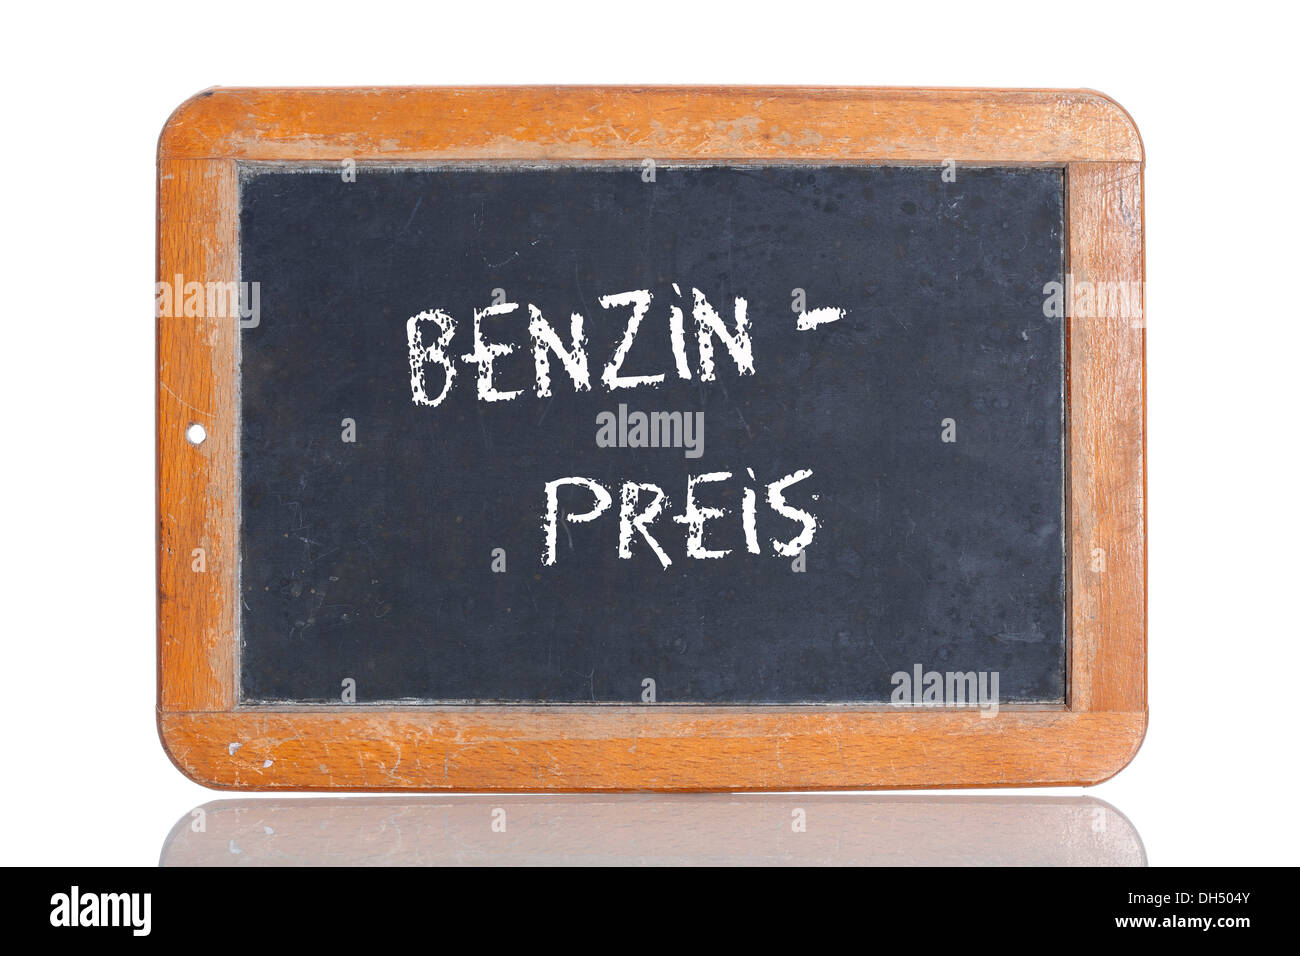 Old chalkboard, lettering 'BENZINPREIS', German for 'PETROL PRICE' Stock Photo